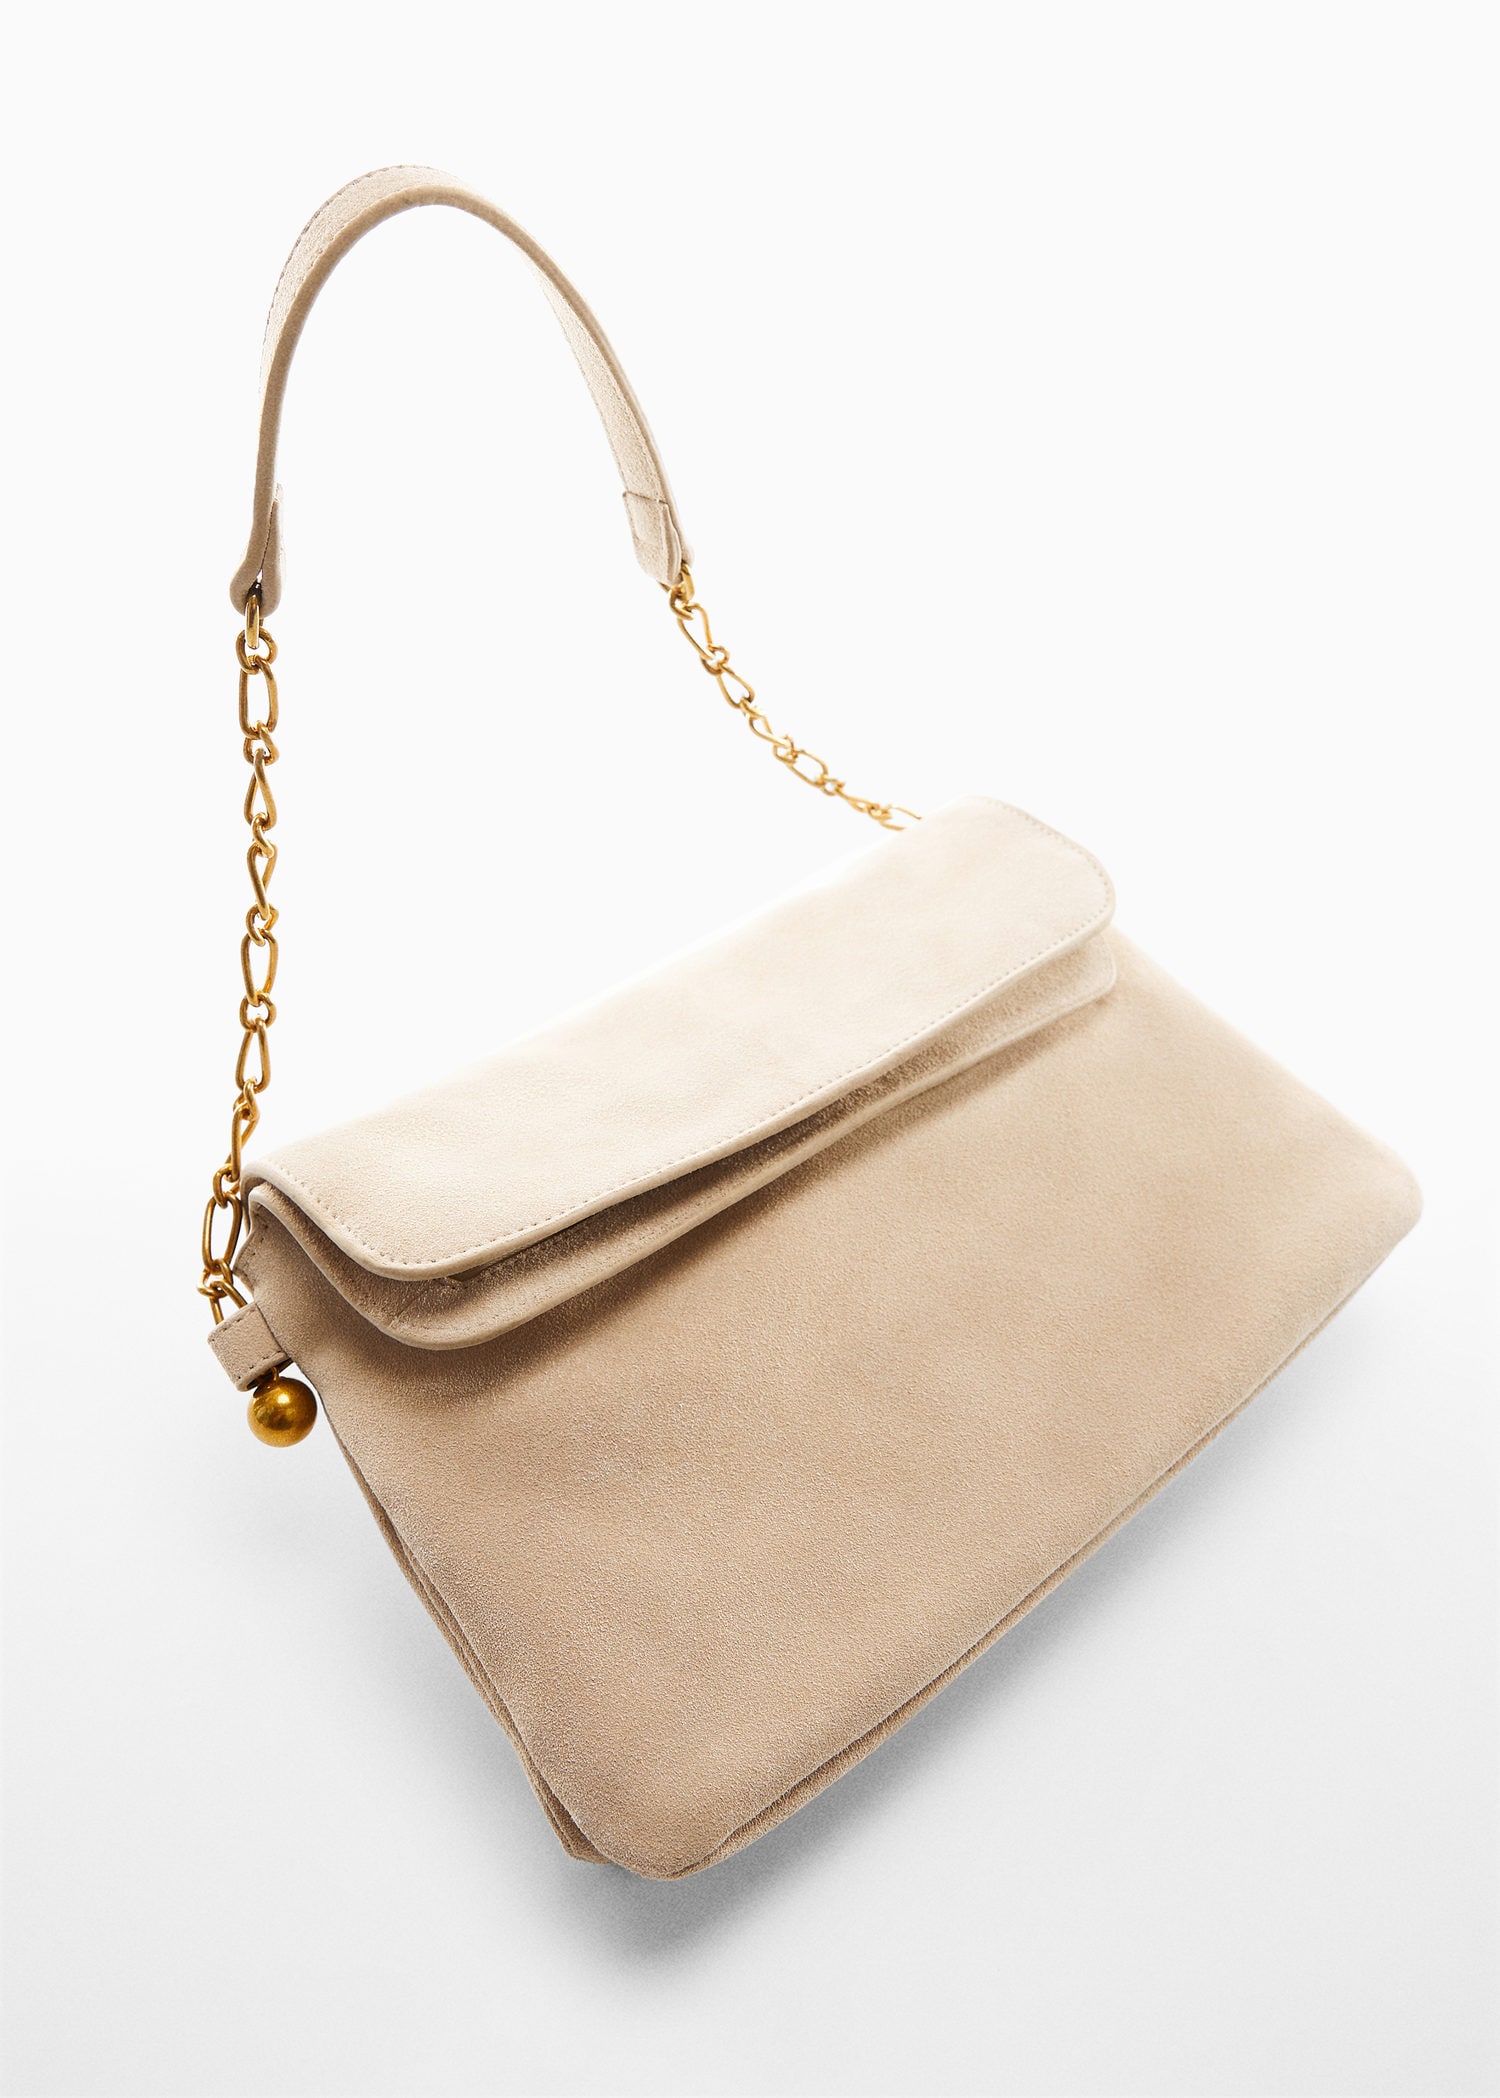 The hottest designer handbags for autumn 2021 – from Jennifer Lopez's Fendi  Touch bag, to Maison Margiela's retro The Swalk II clutch